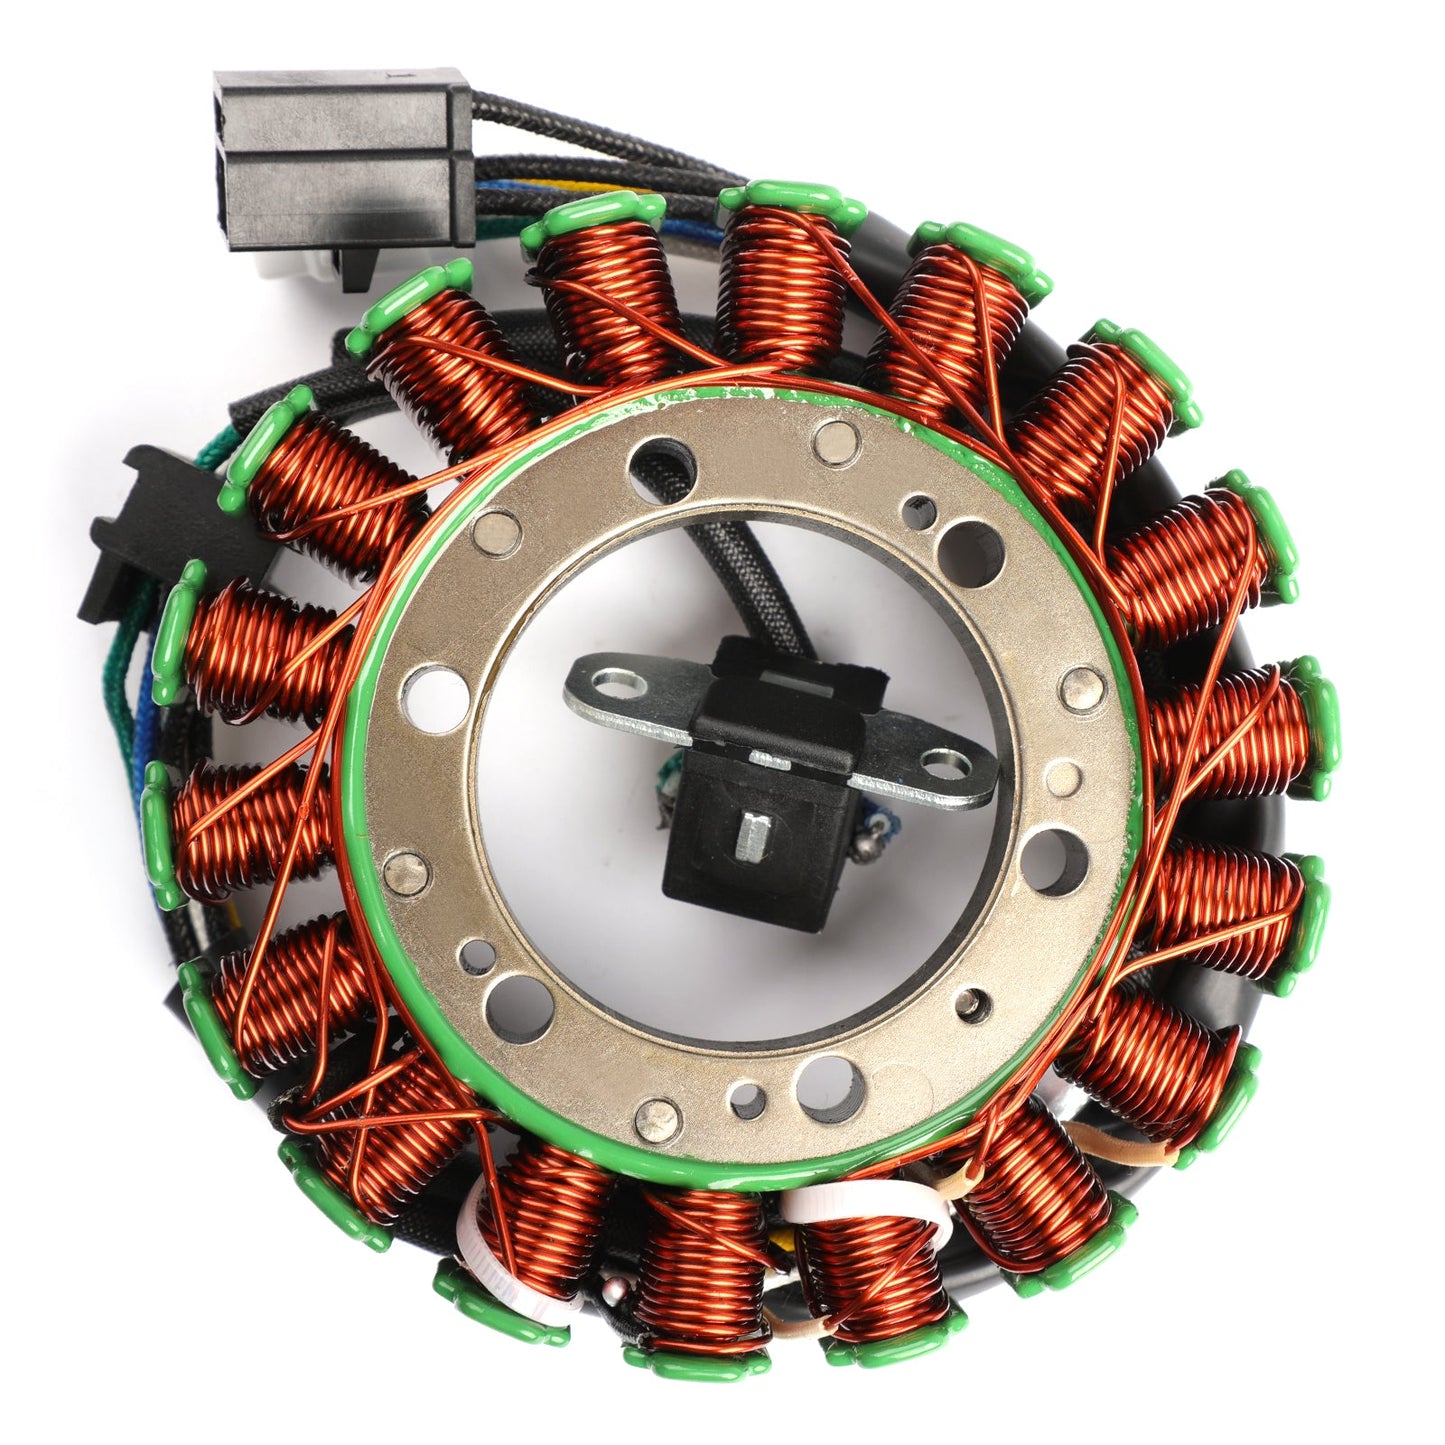 Kit de Stator de Rotor de volant d'inertie pour Suzuki Eiger LTA400 LTF400 32102-38F01 32102-38F00 Fedex Express